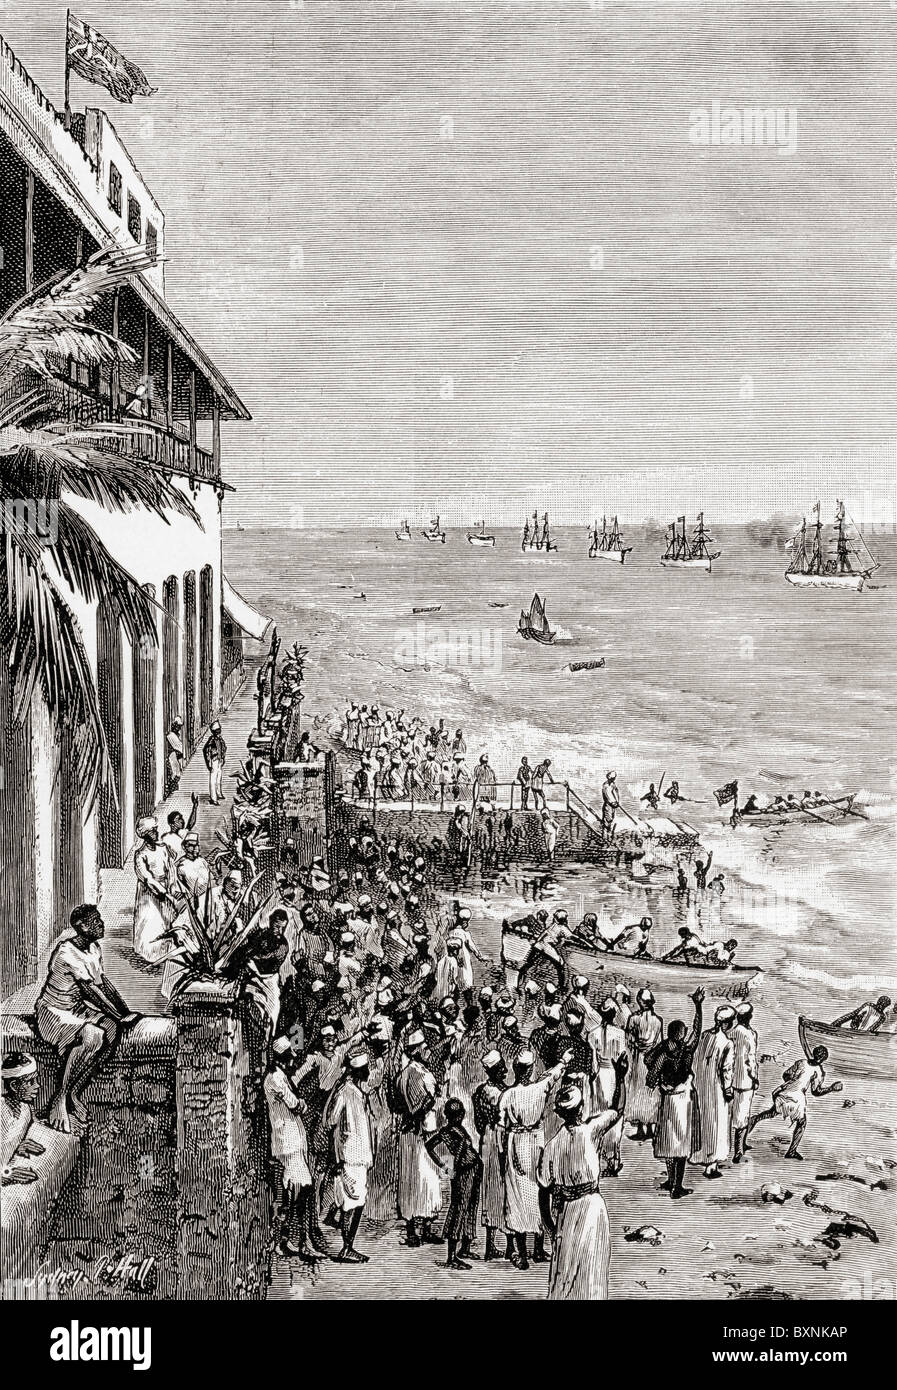 Henry Morton Stanley's Emin Pasha Relief Expedition of 1886-1889, returning to Zanzibar. Stock Photo